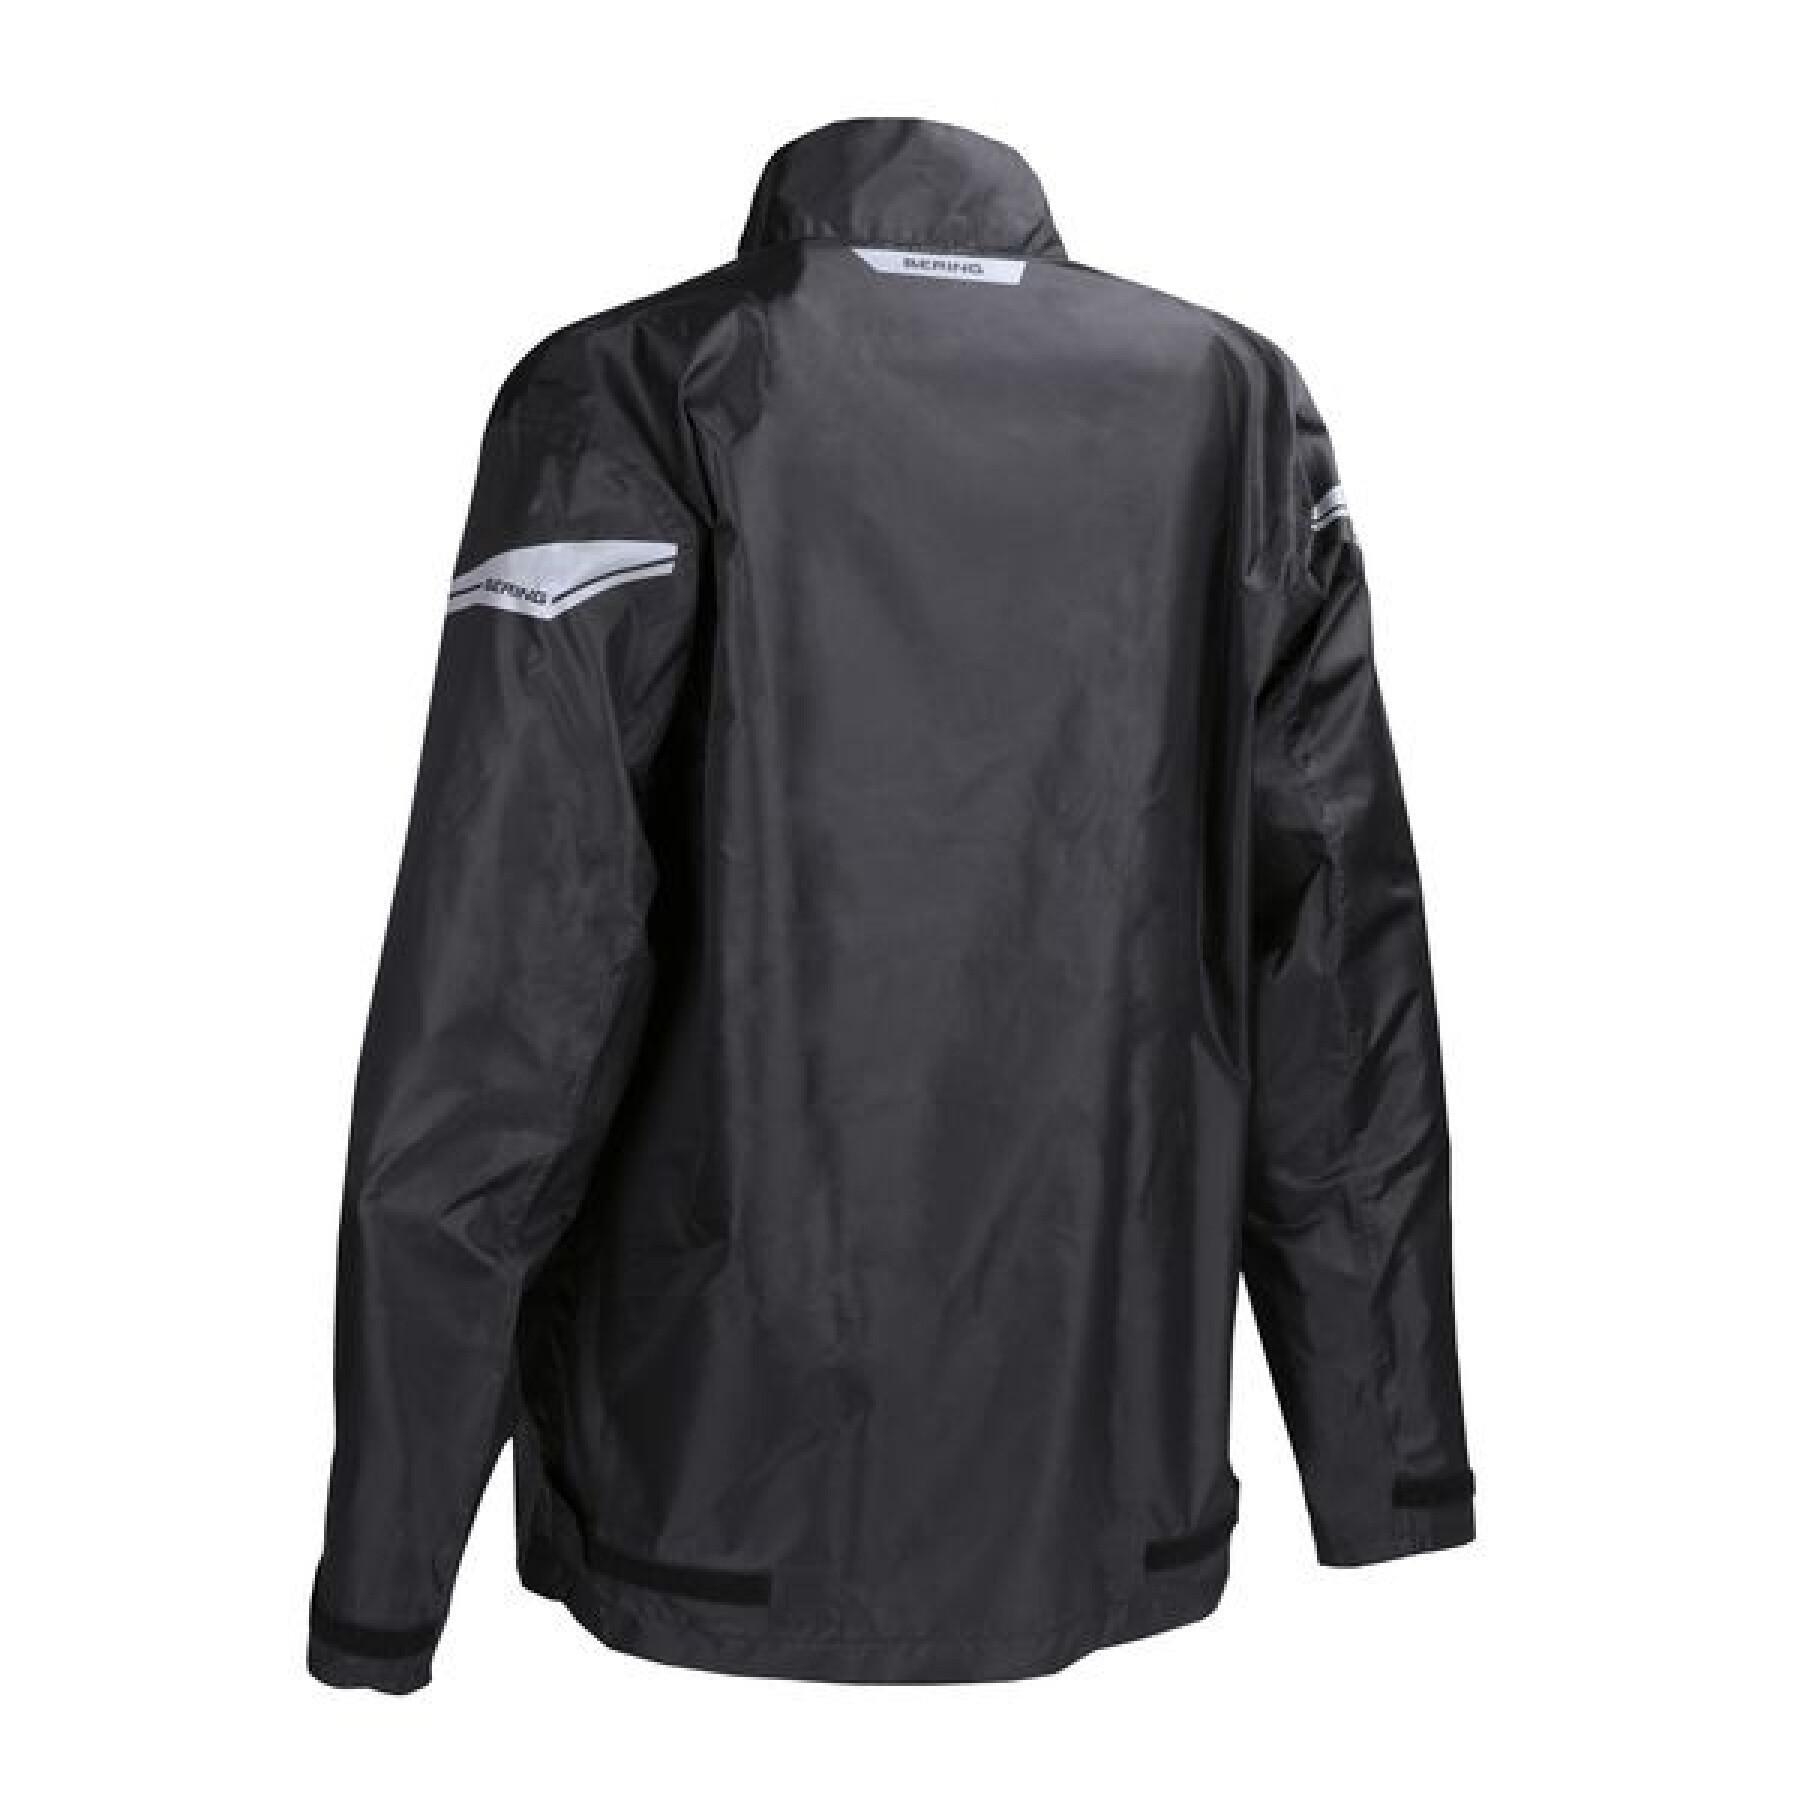 Motorcycle rain jacket Bering Toriano